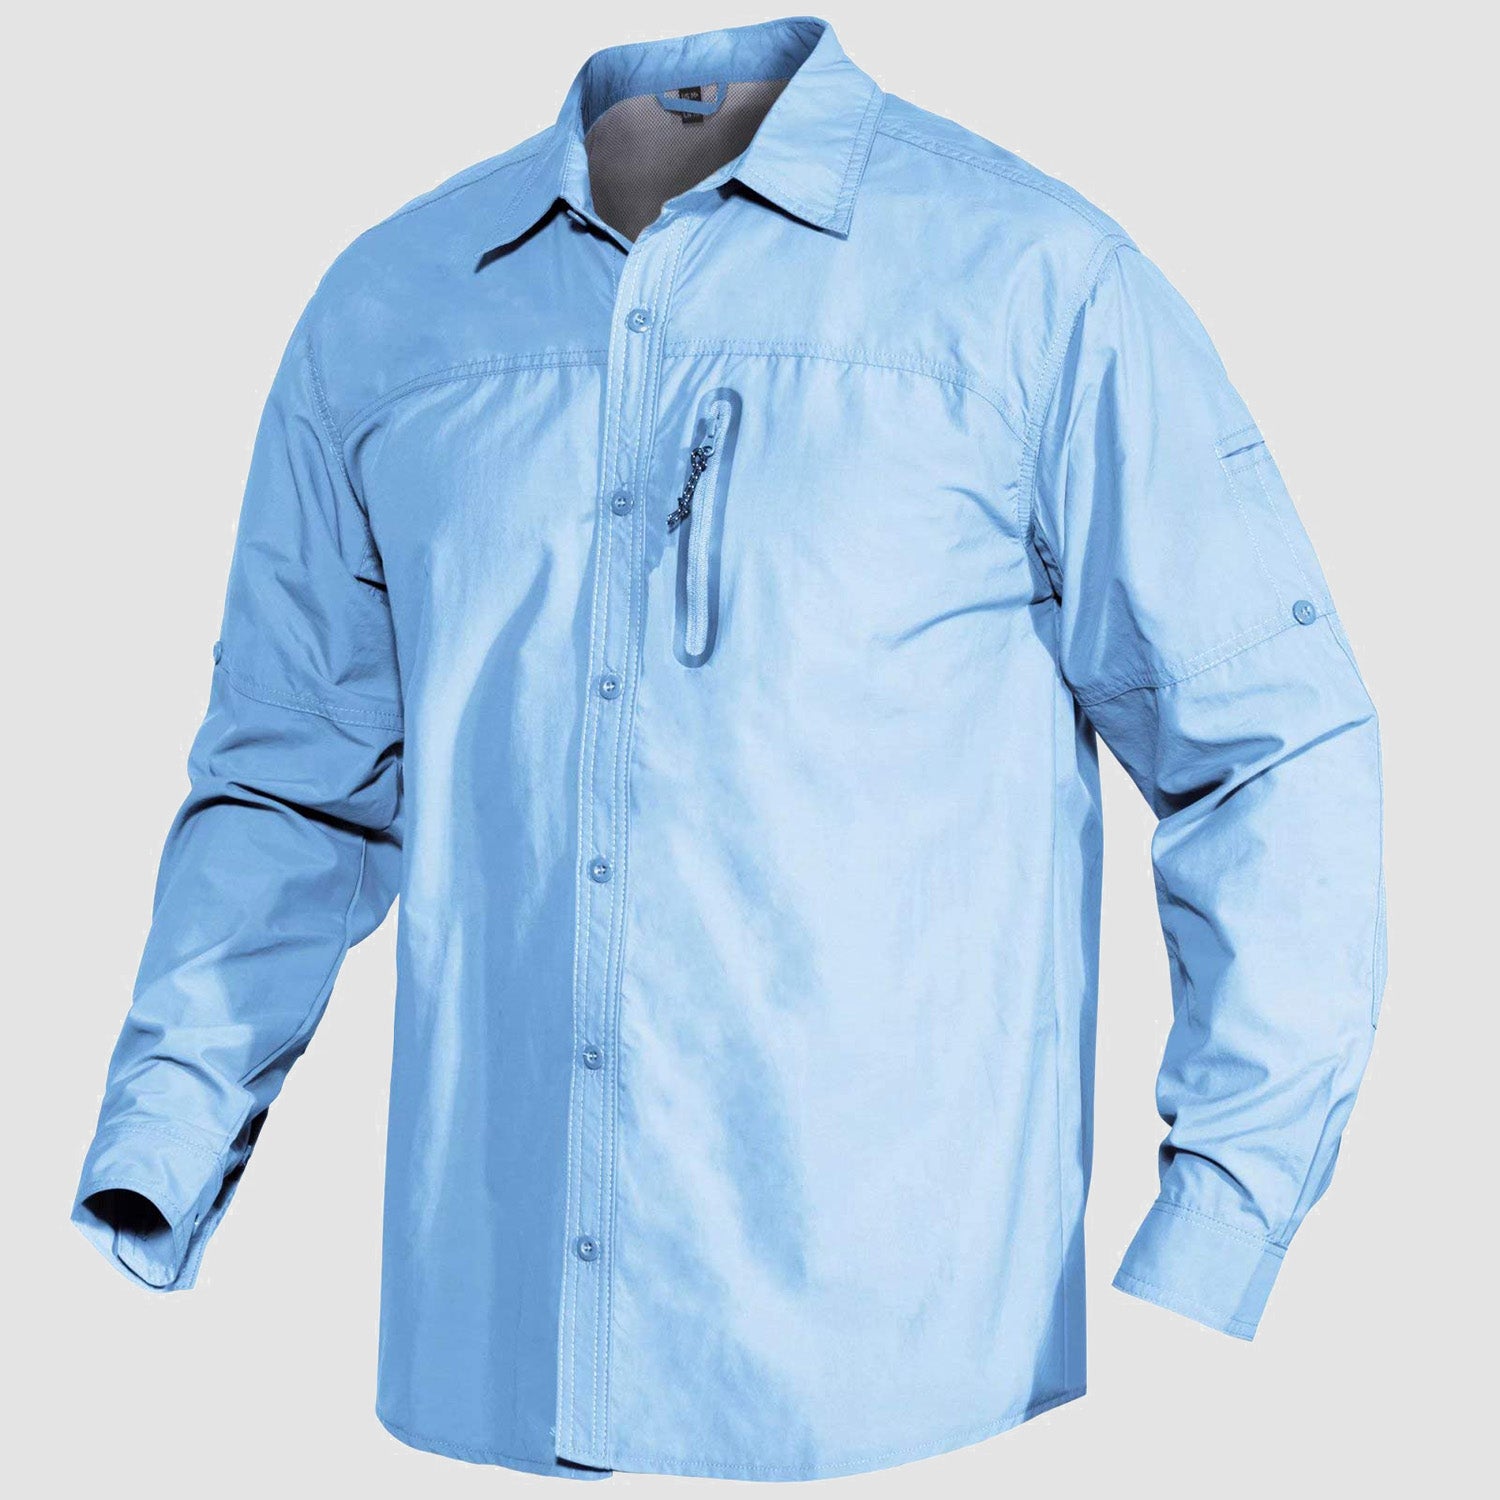 Men's Tactical Shirts with Zipper Pocket Long Sleeve Work Shirts